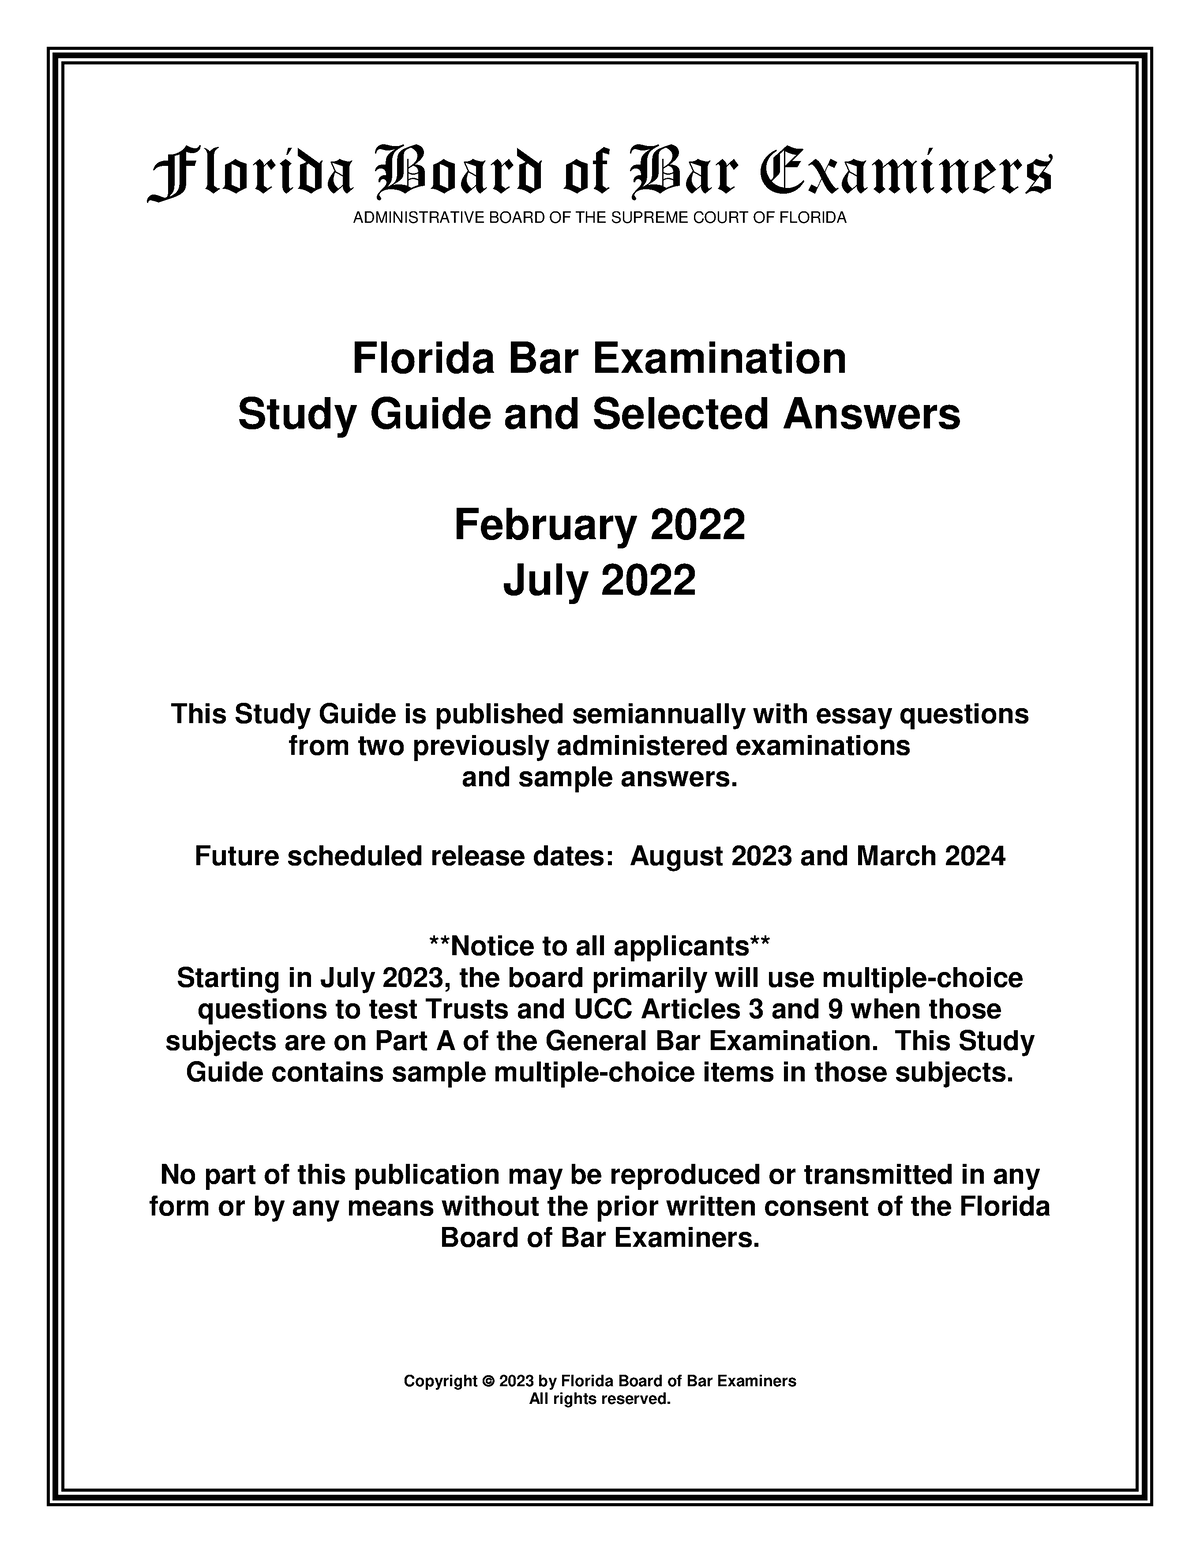 SG0323 Florida Bar Exam Study Aids RSM 616 University of Miami